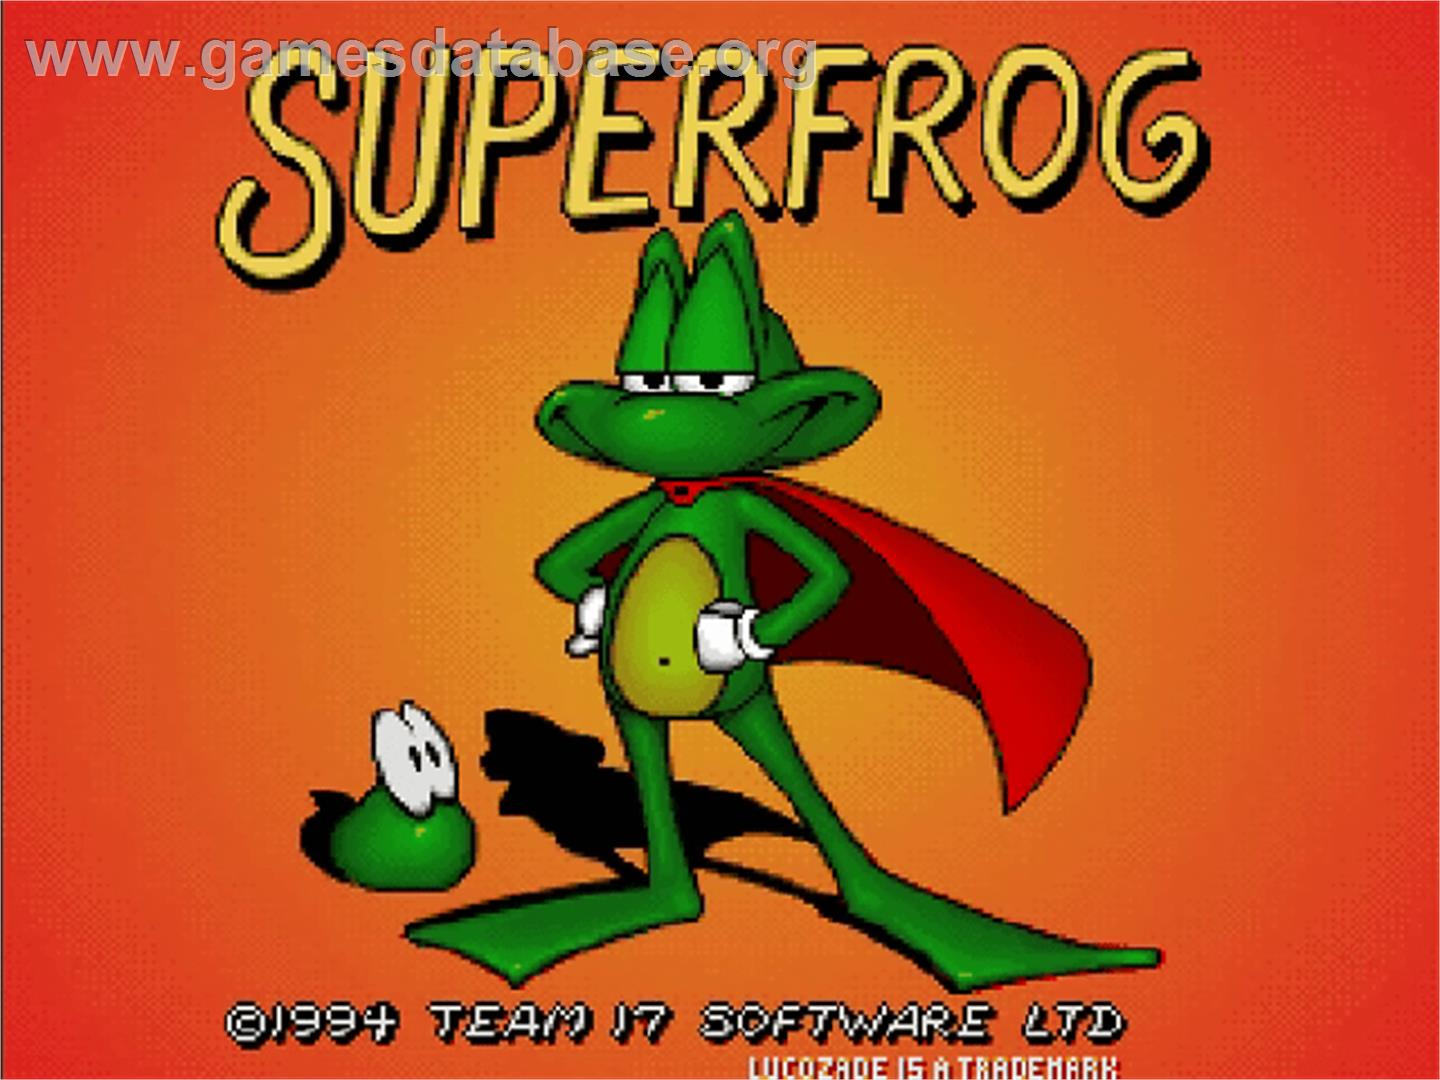 Super Frog - Commodore Amiga CD32 - Artwork - Title Screen